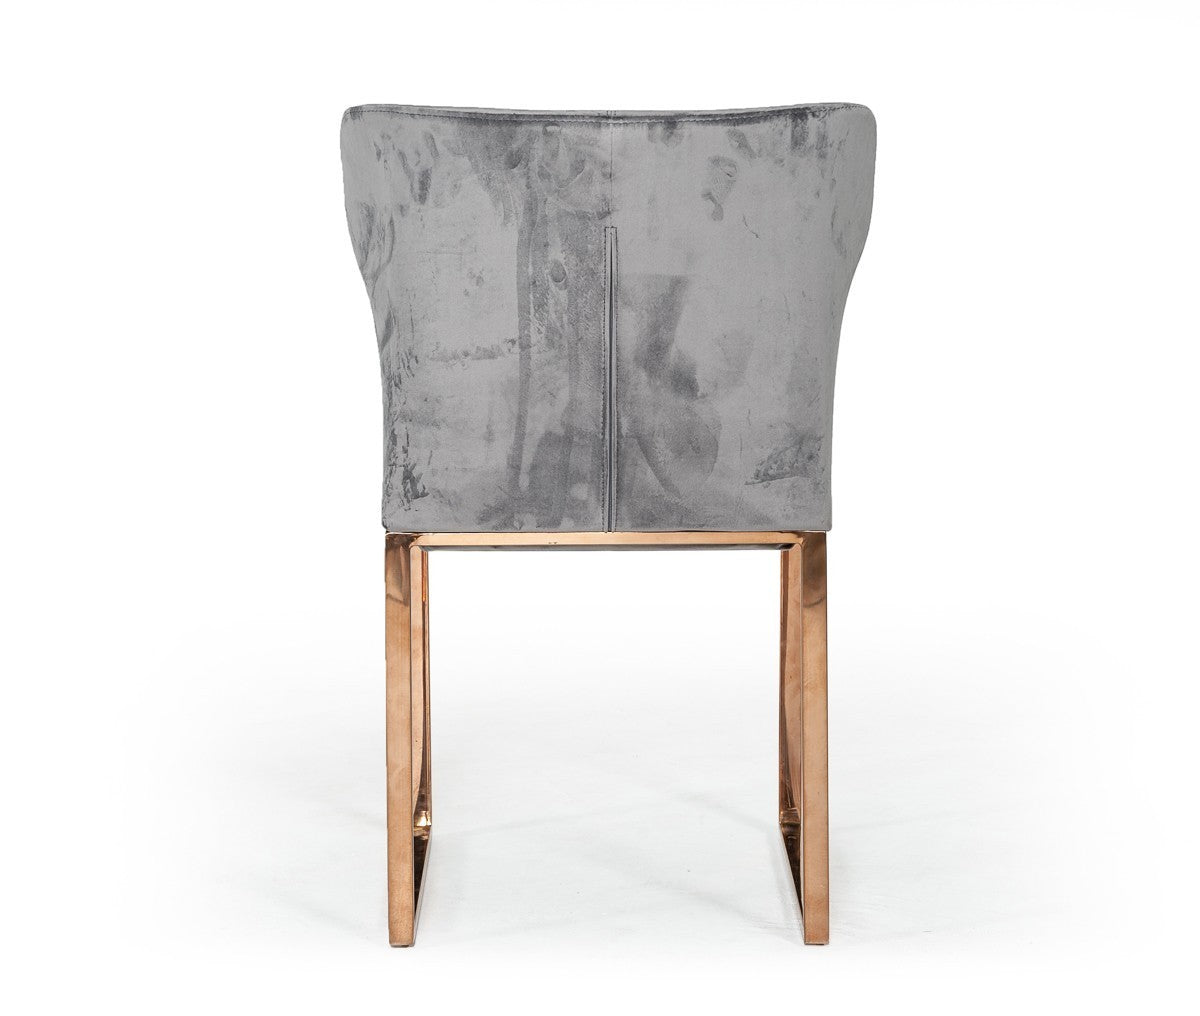 Chadwick Modern Grey Velvet & Rose Gold Dining Chair - 1 chair